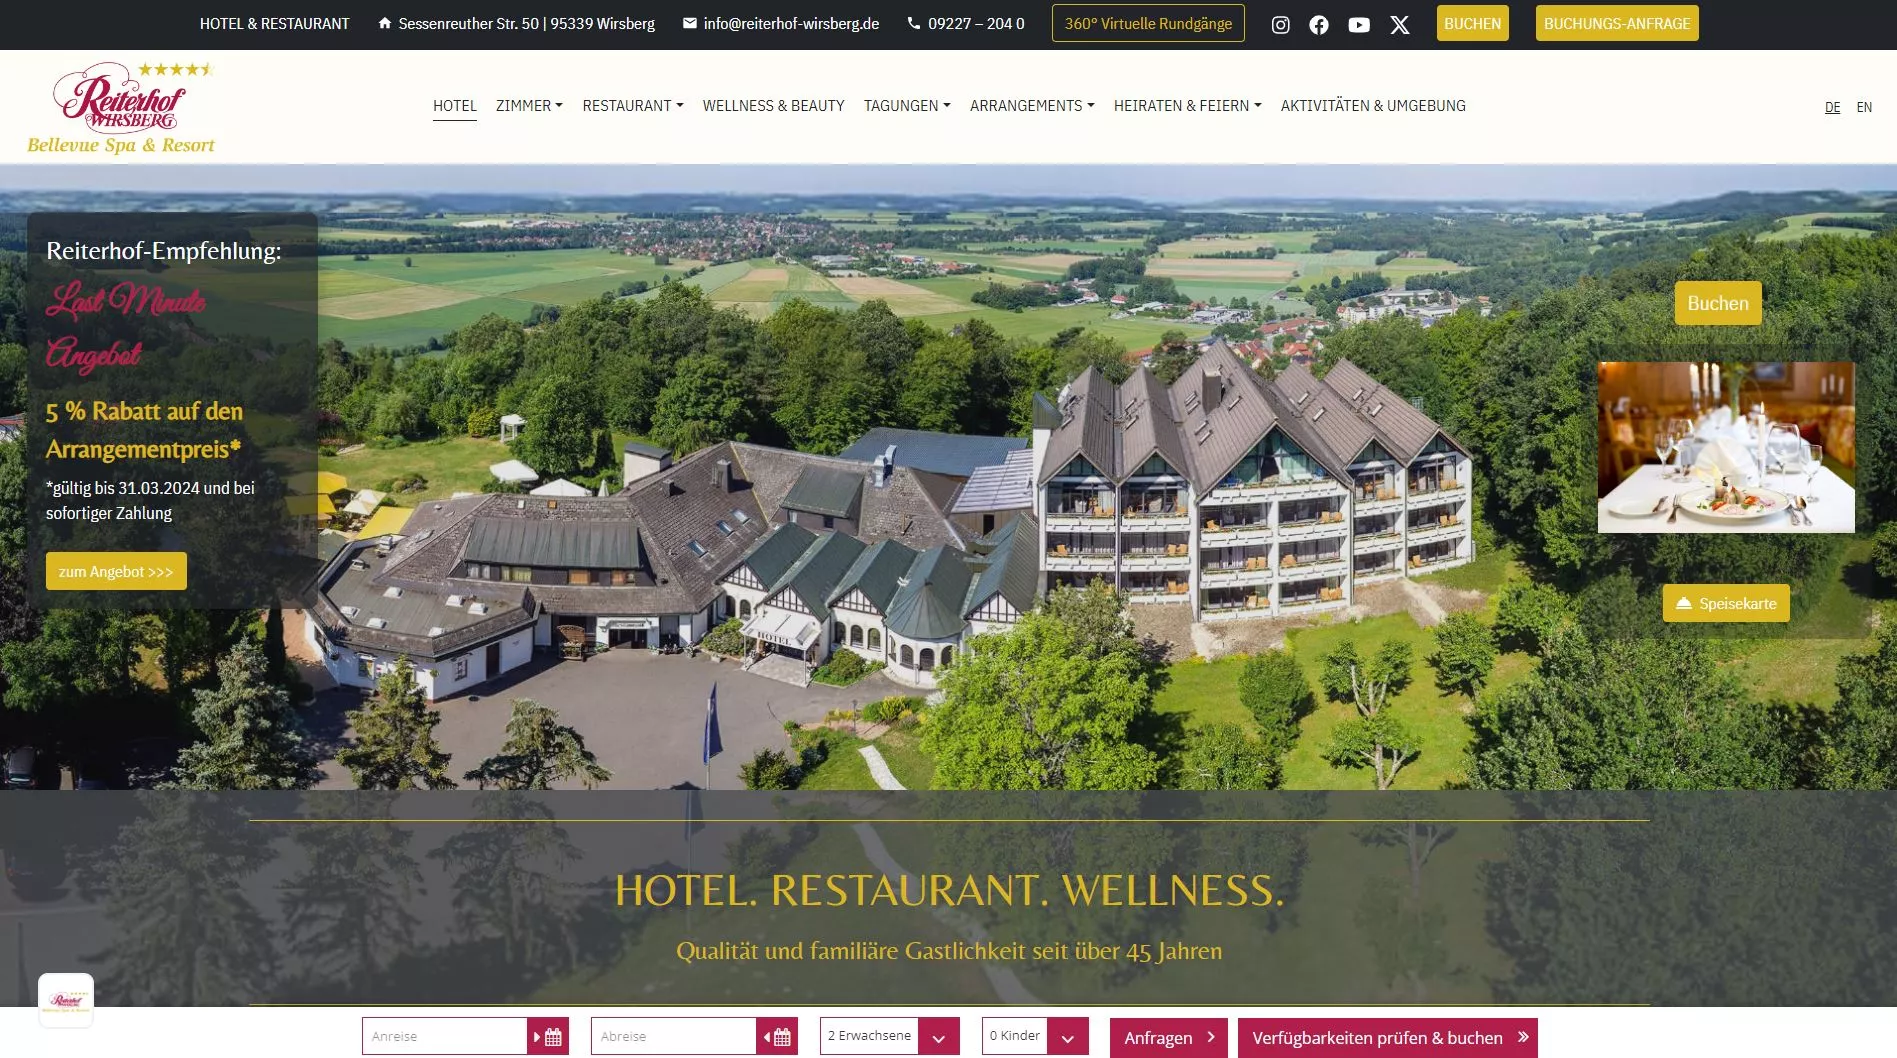 Hotel Bellevue Spa & Resort Reiterhof Wirsberg